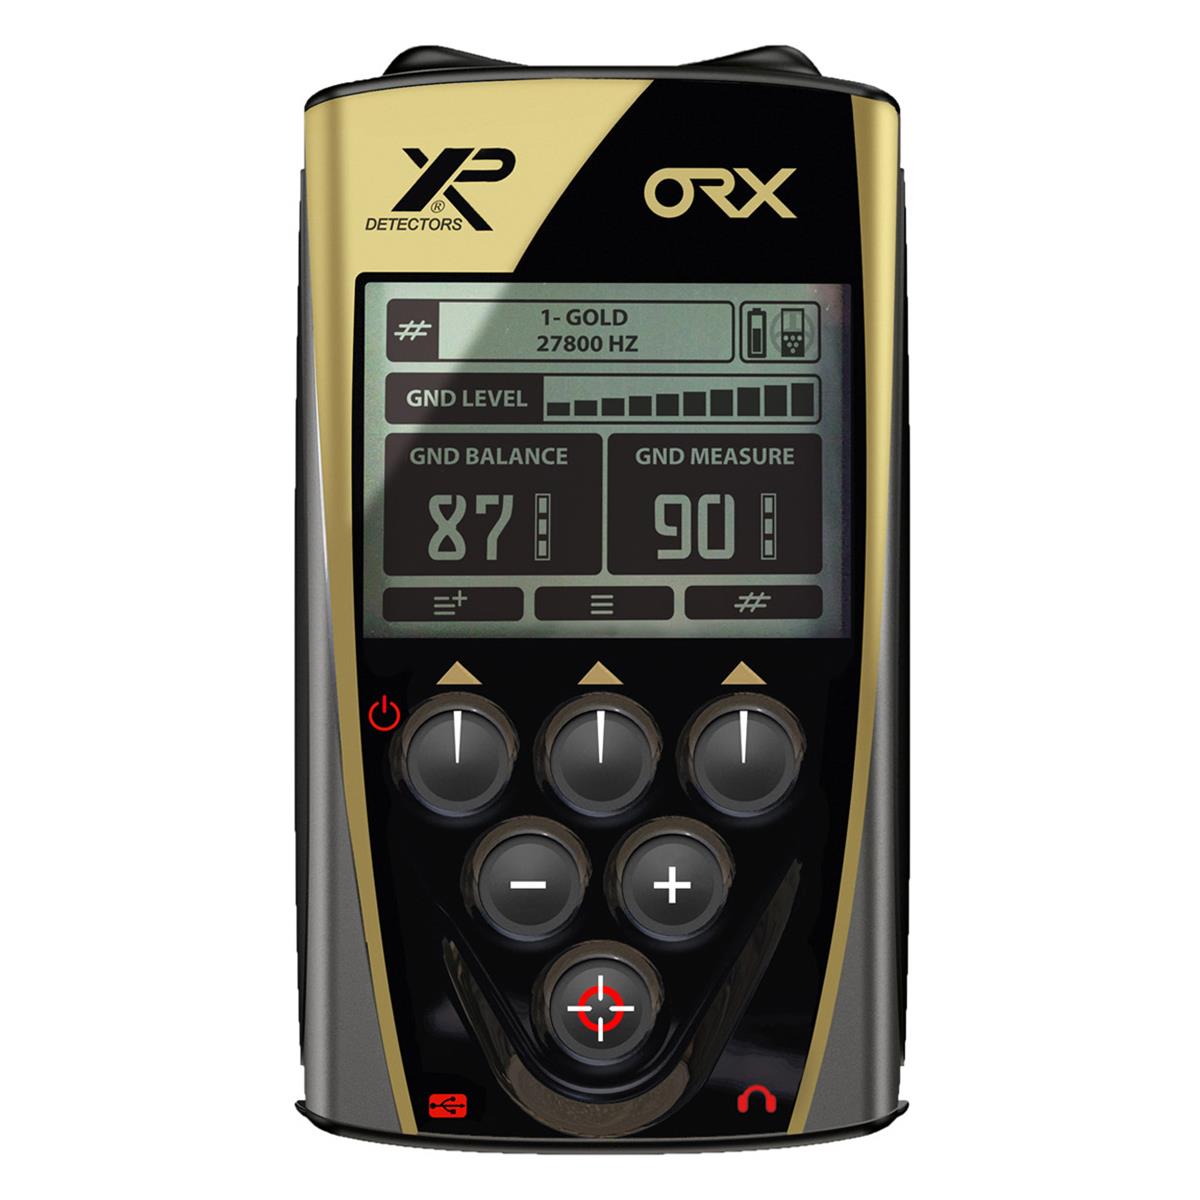 Image of XP Metal Detectors XP ORX Back-lit LCD Display Remote Control